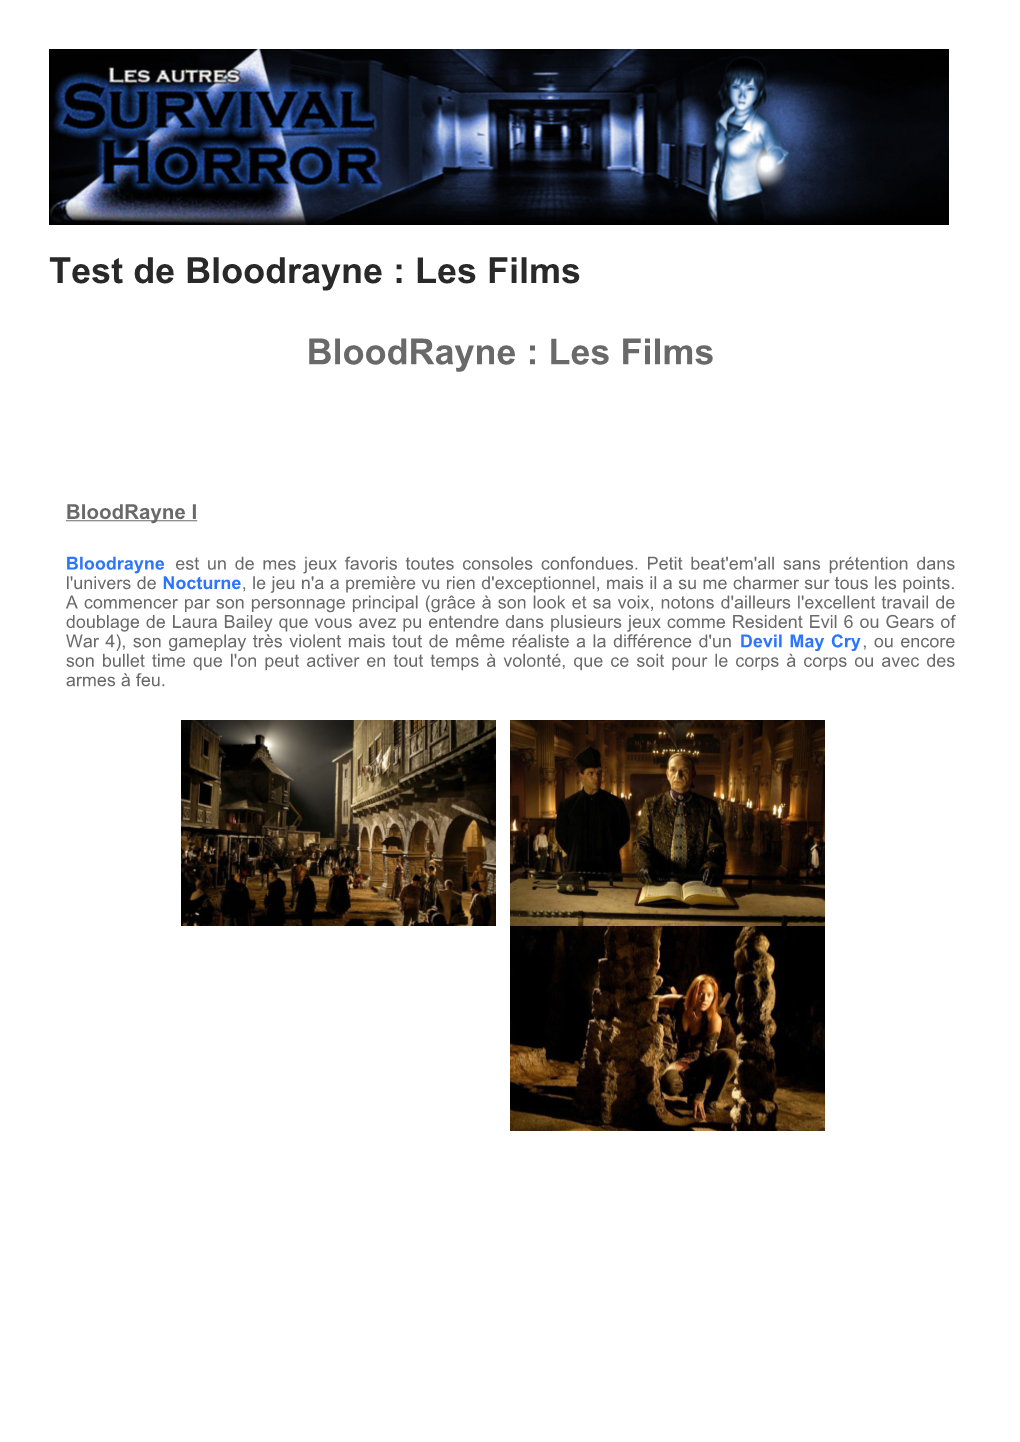 Les Films Bloodrayne